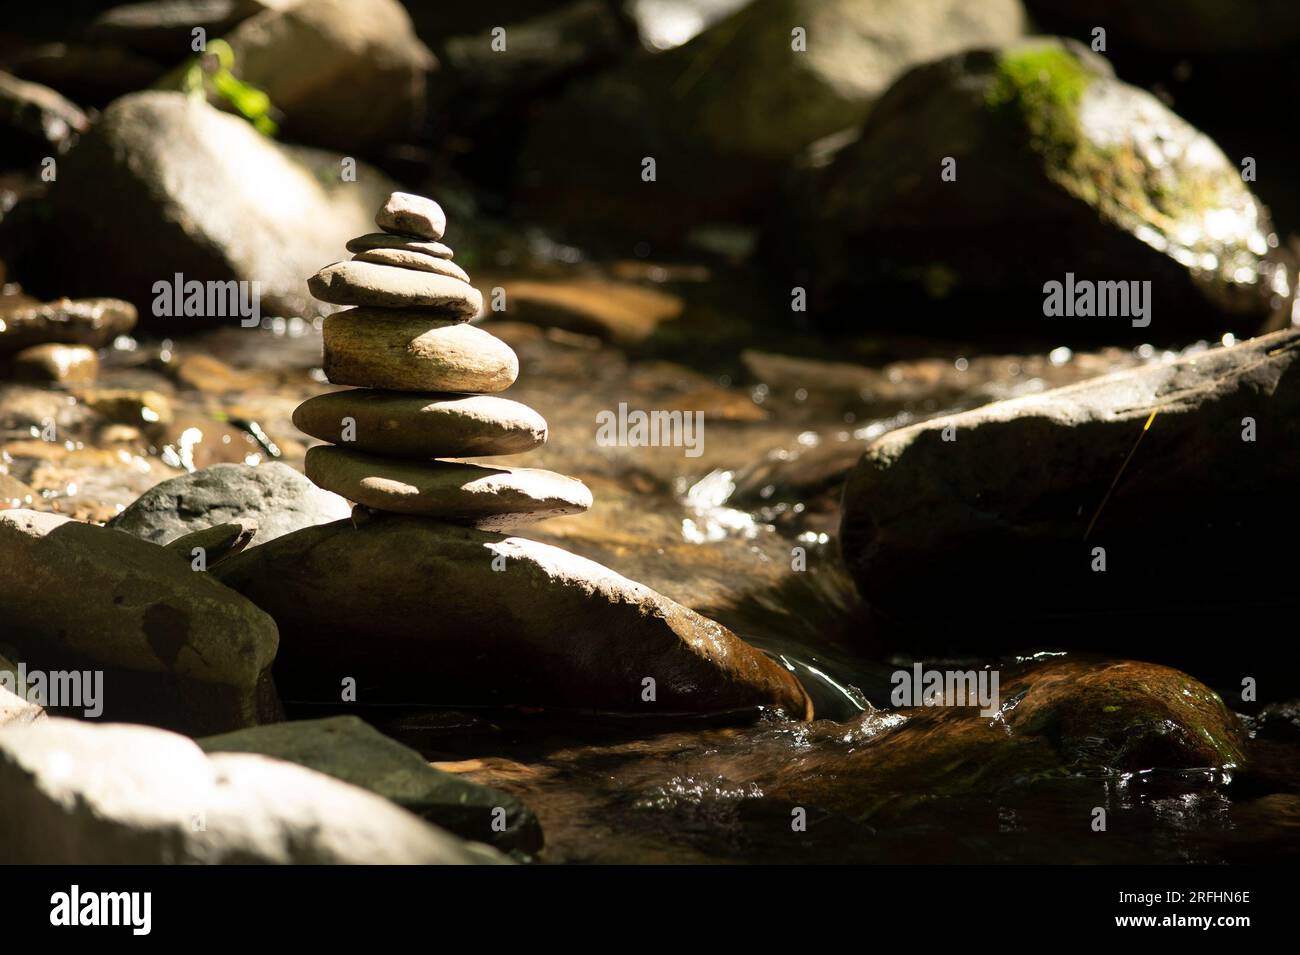 Meditation stones in stream Stock Photo